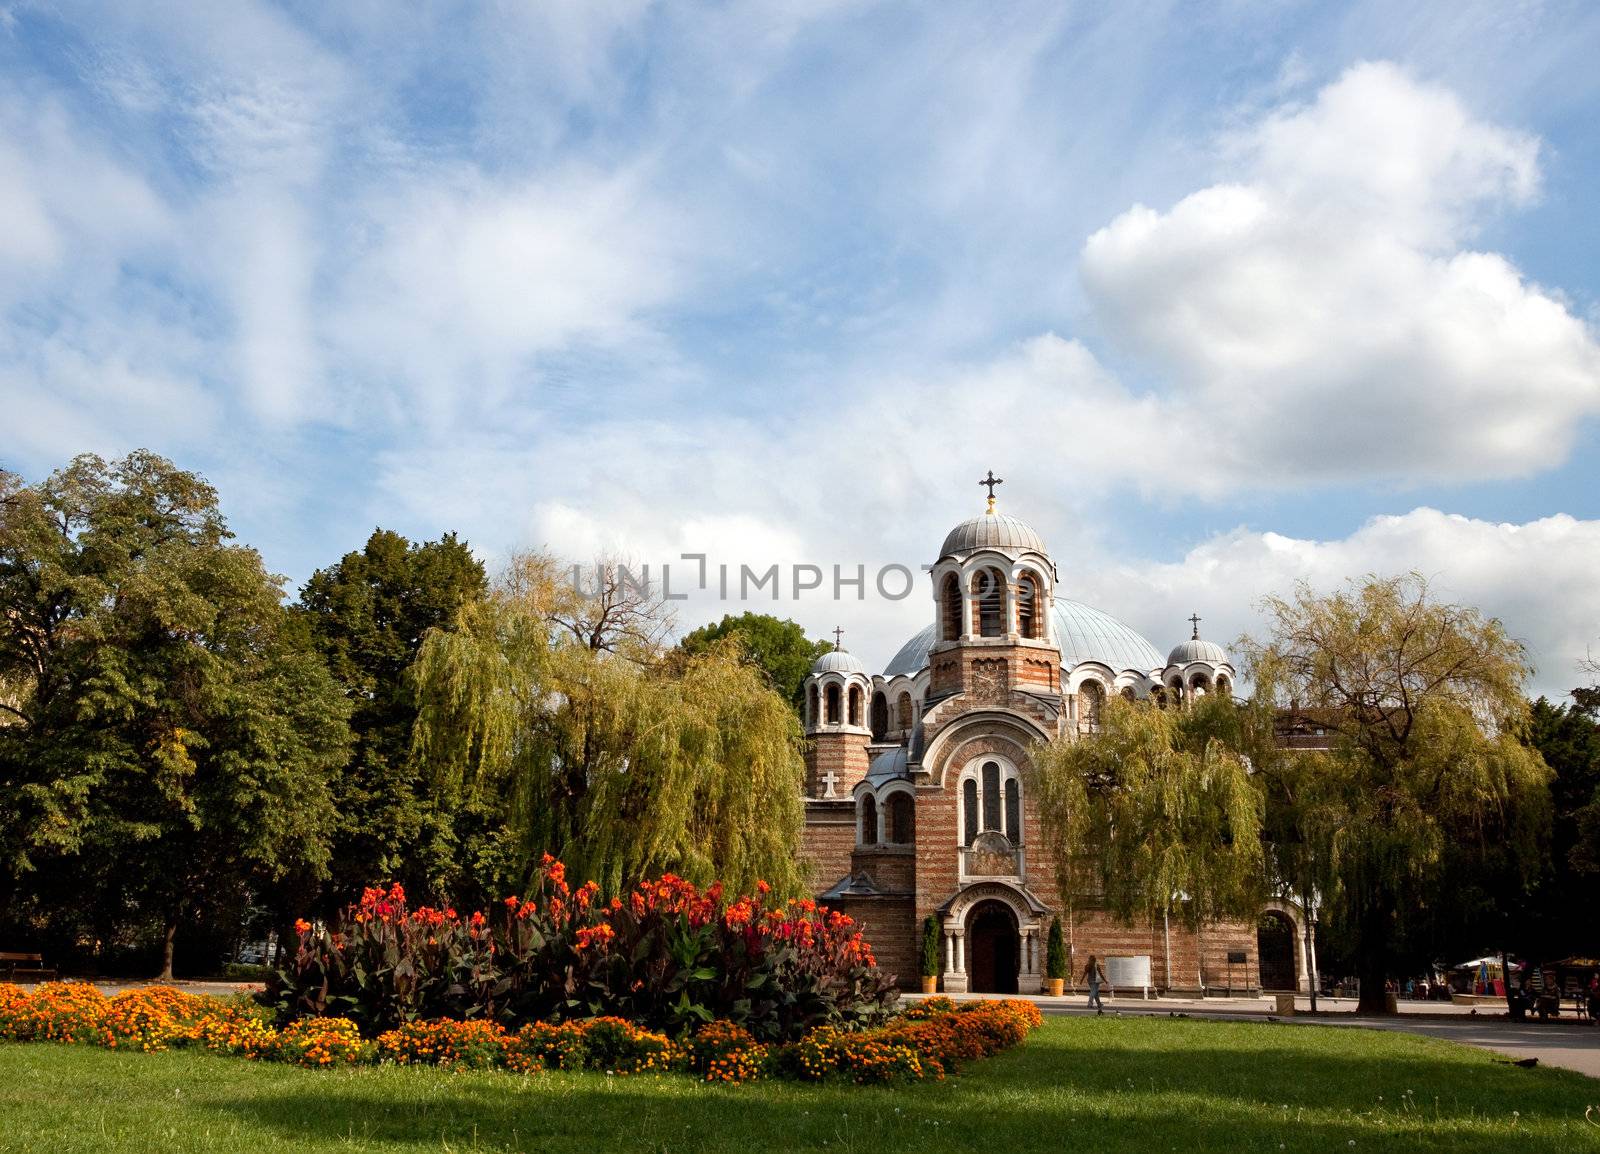 a view of the "Sveti Sedmochislenitsi" church in Sofia, Bulgaria